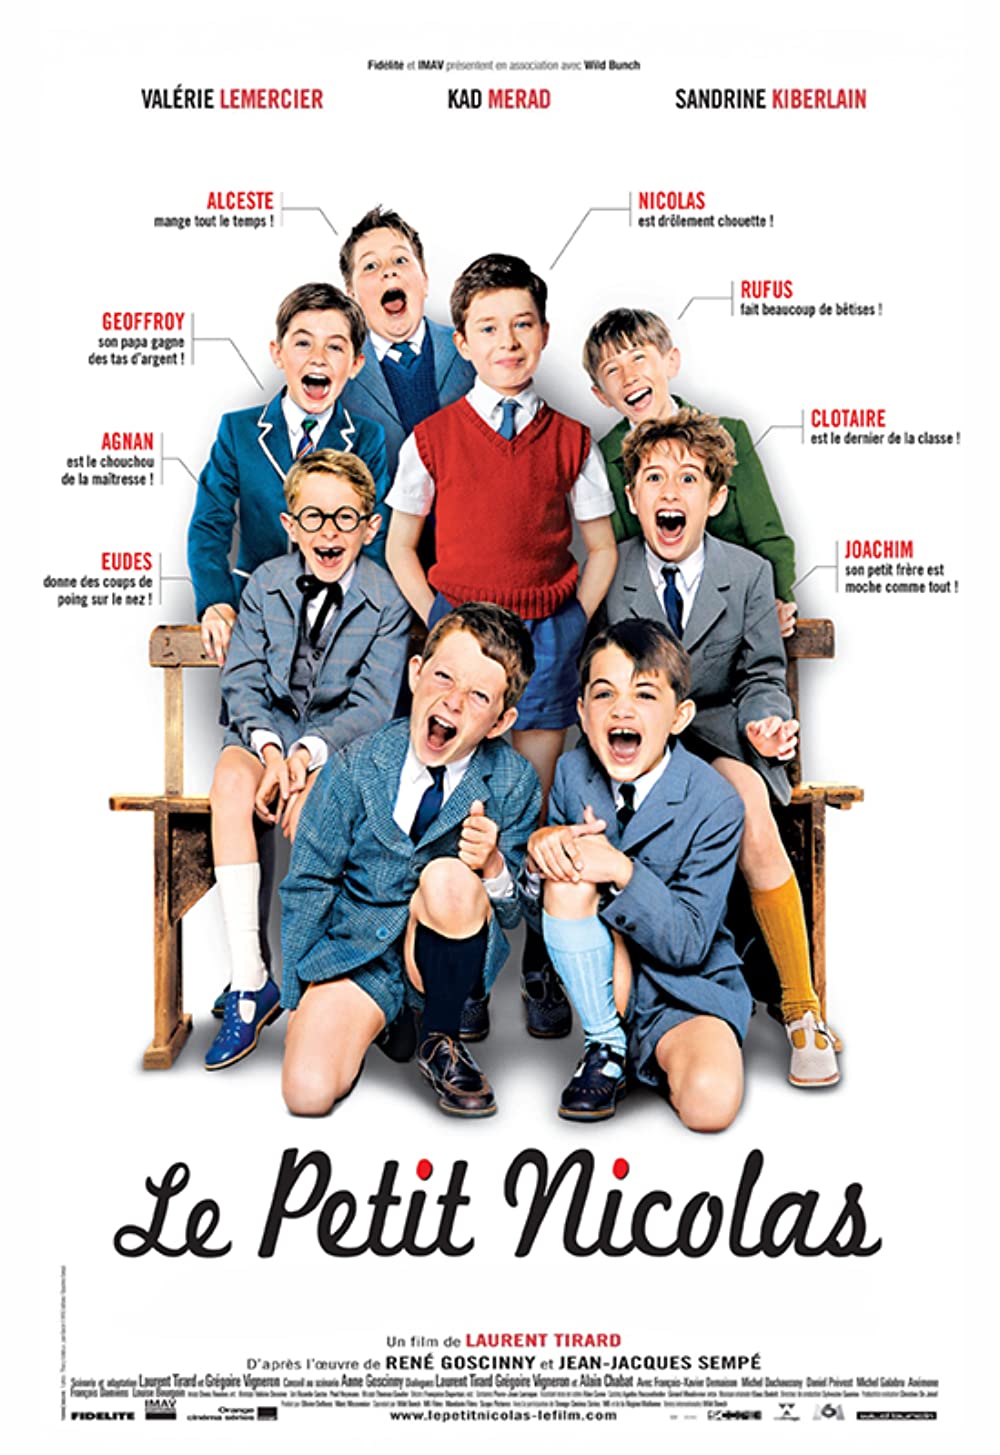  Le Petit Nicholas - Nhóc Nicholas (2009)